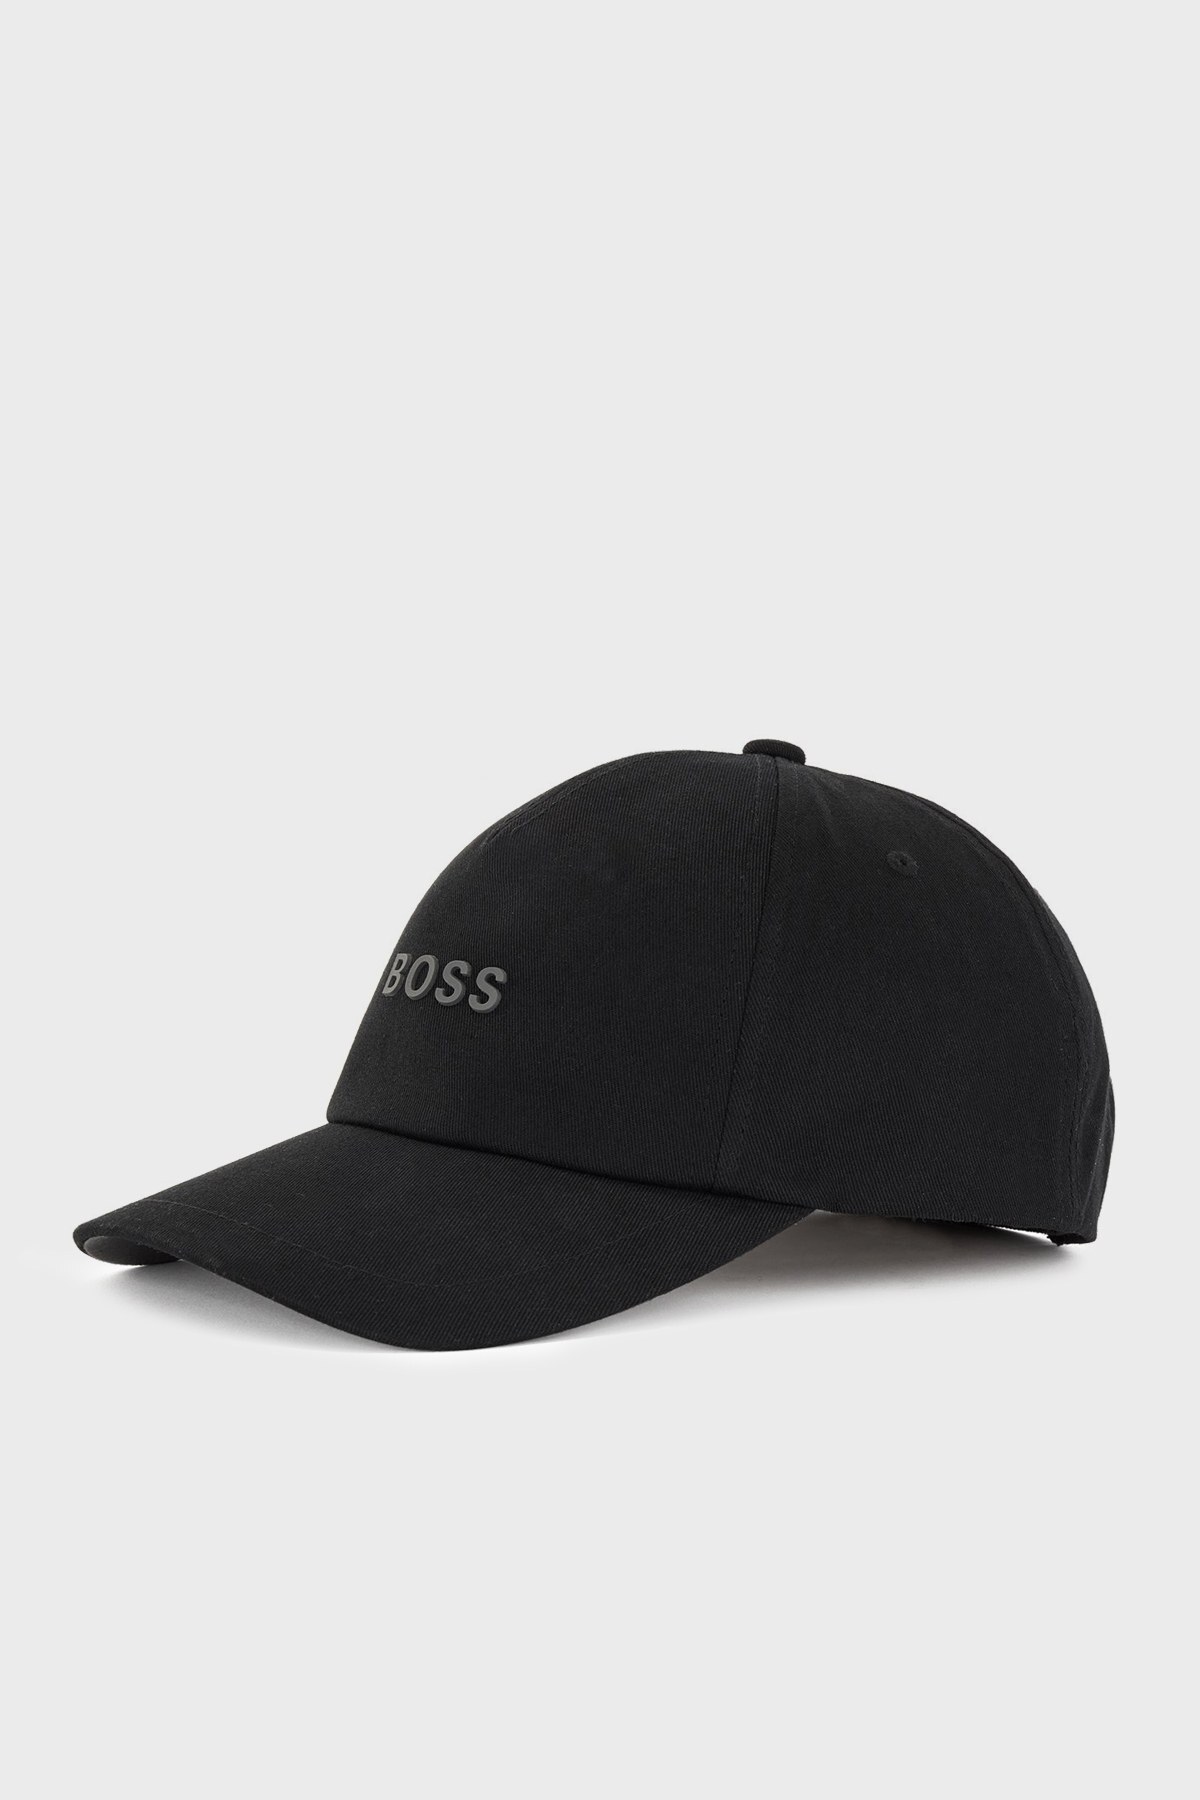 Boss Logo Detaylı Erkek Şapka 50462830 001 SİYAH